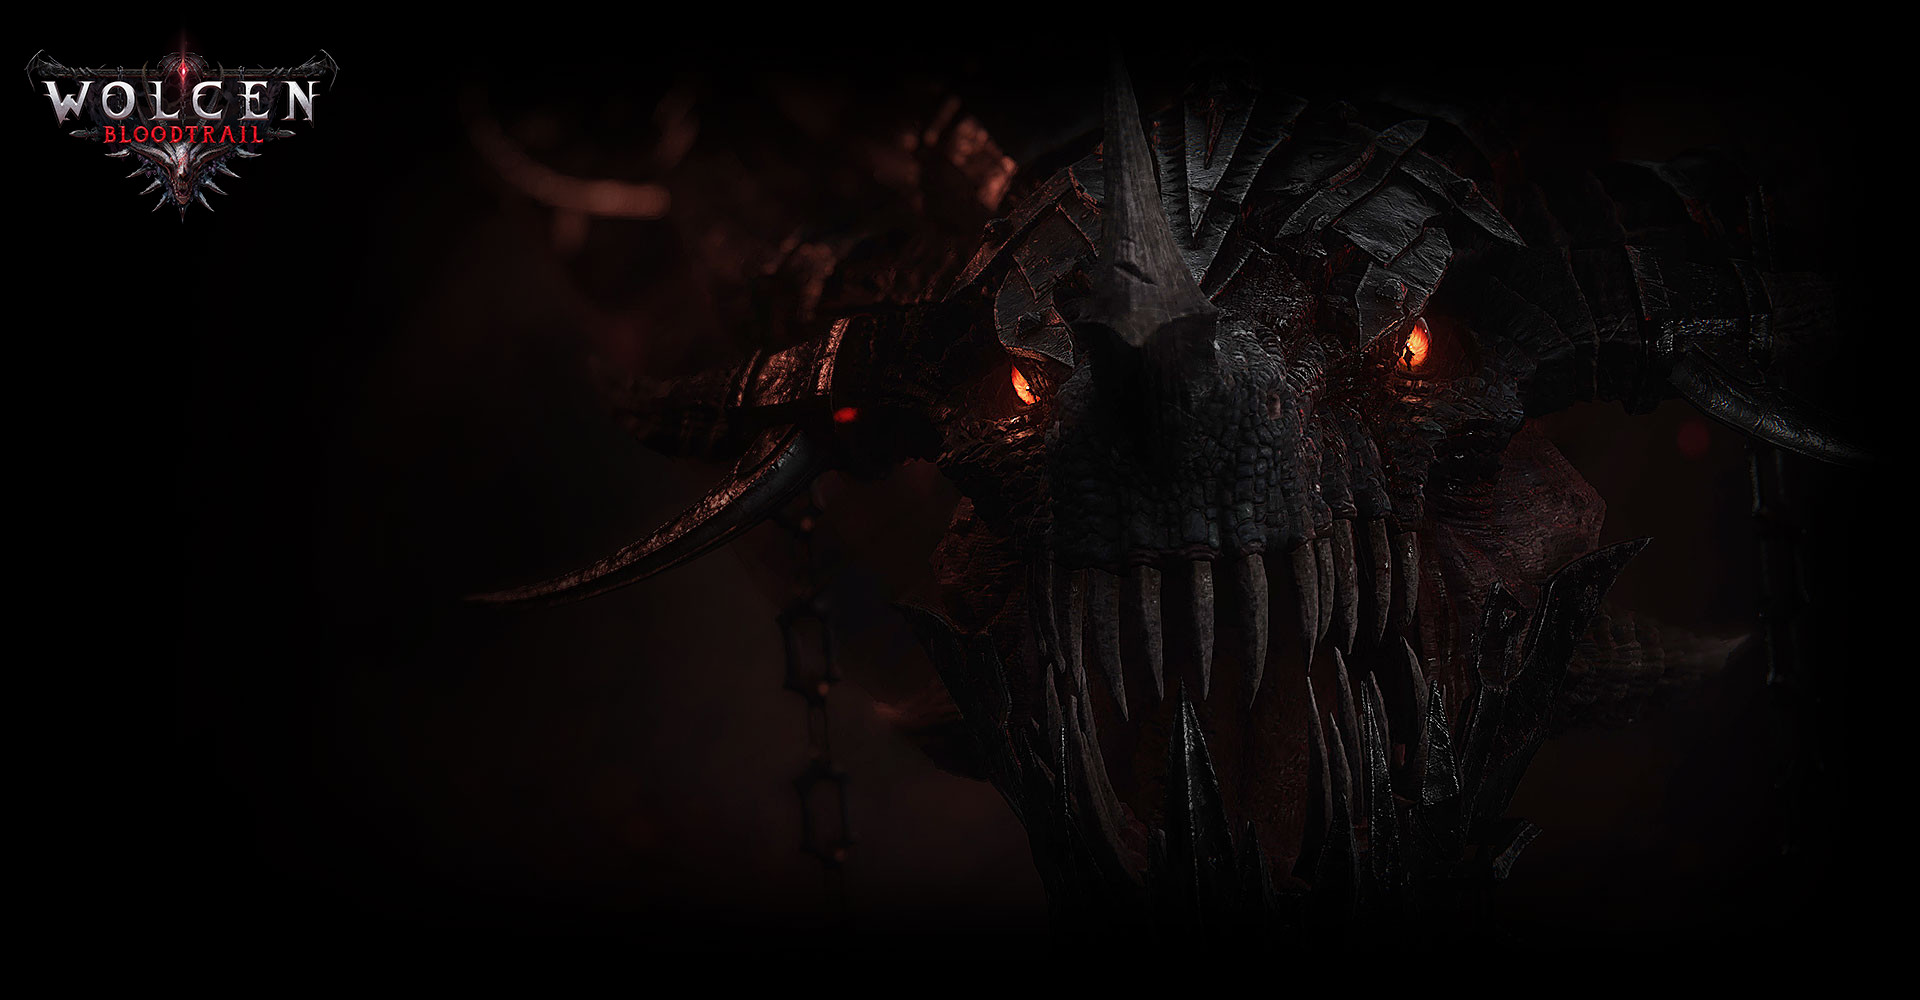 Wolcen: Lords of Mayhem screenshot